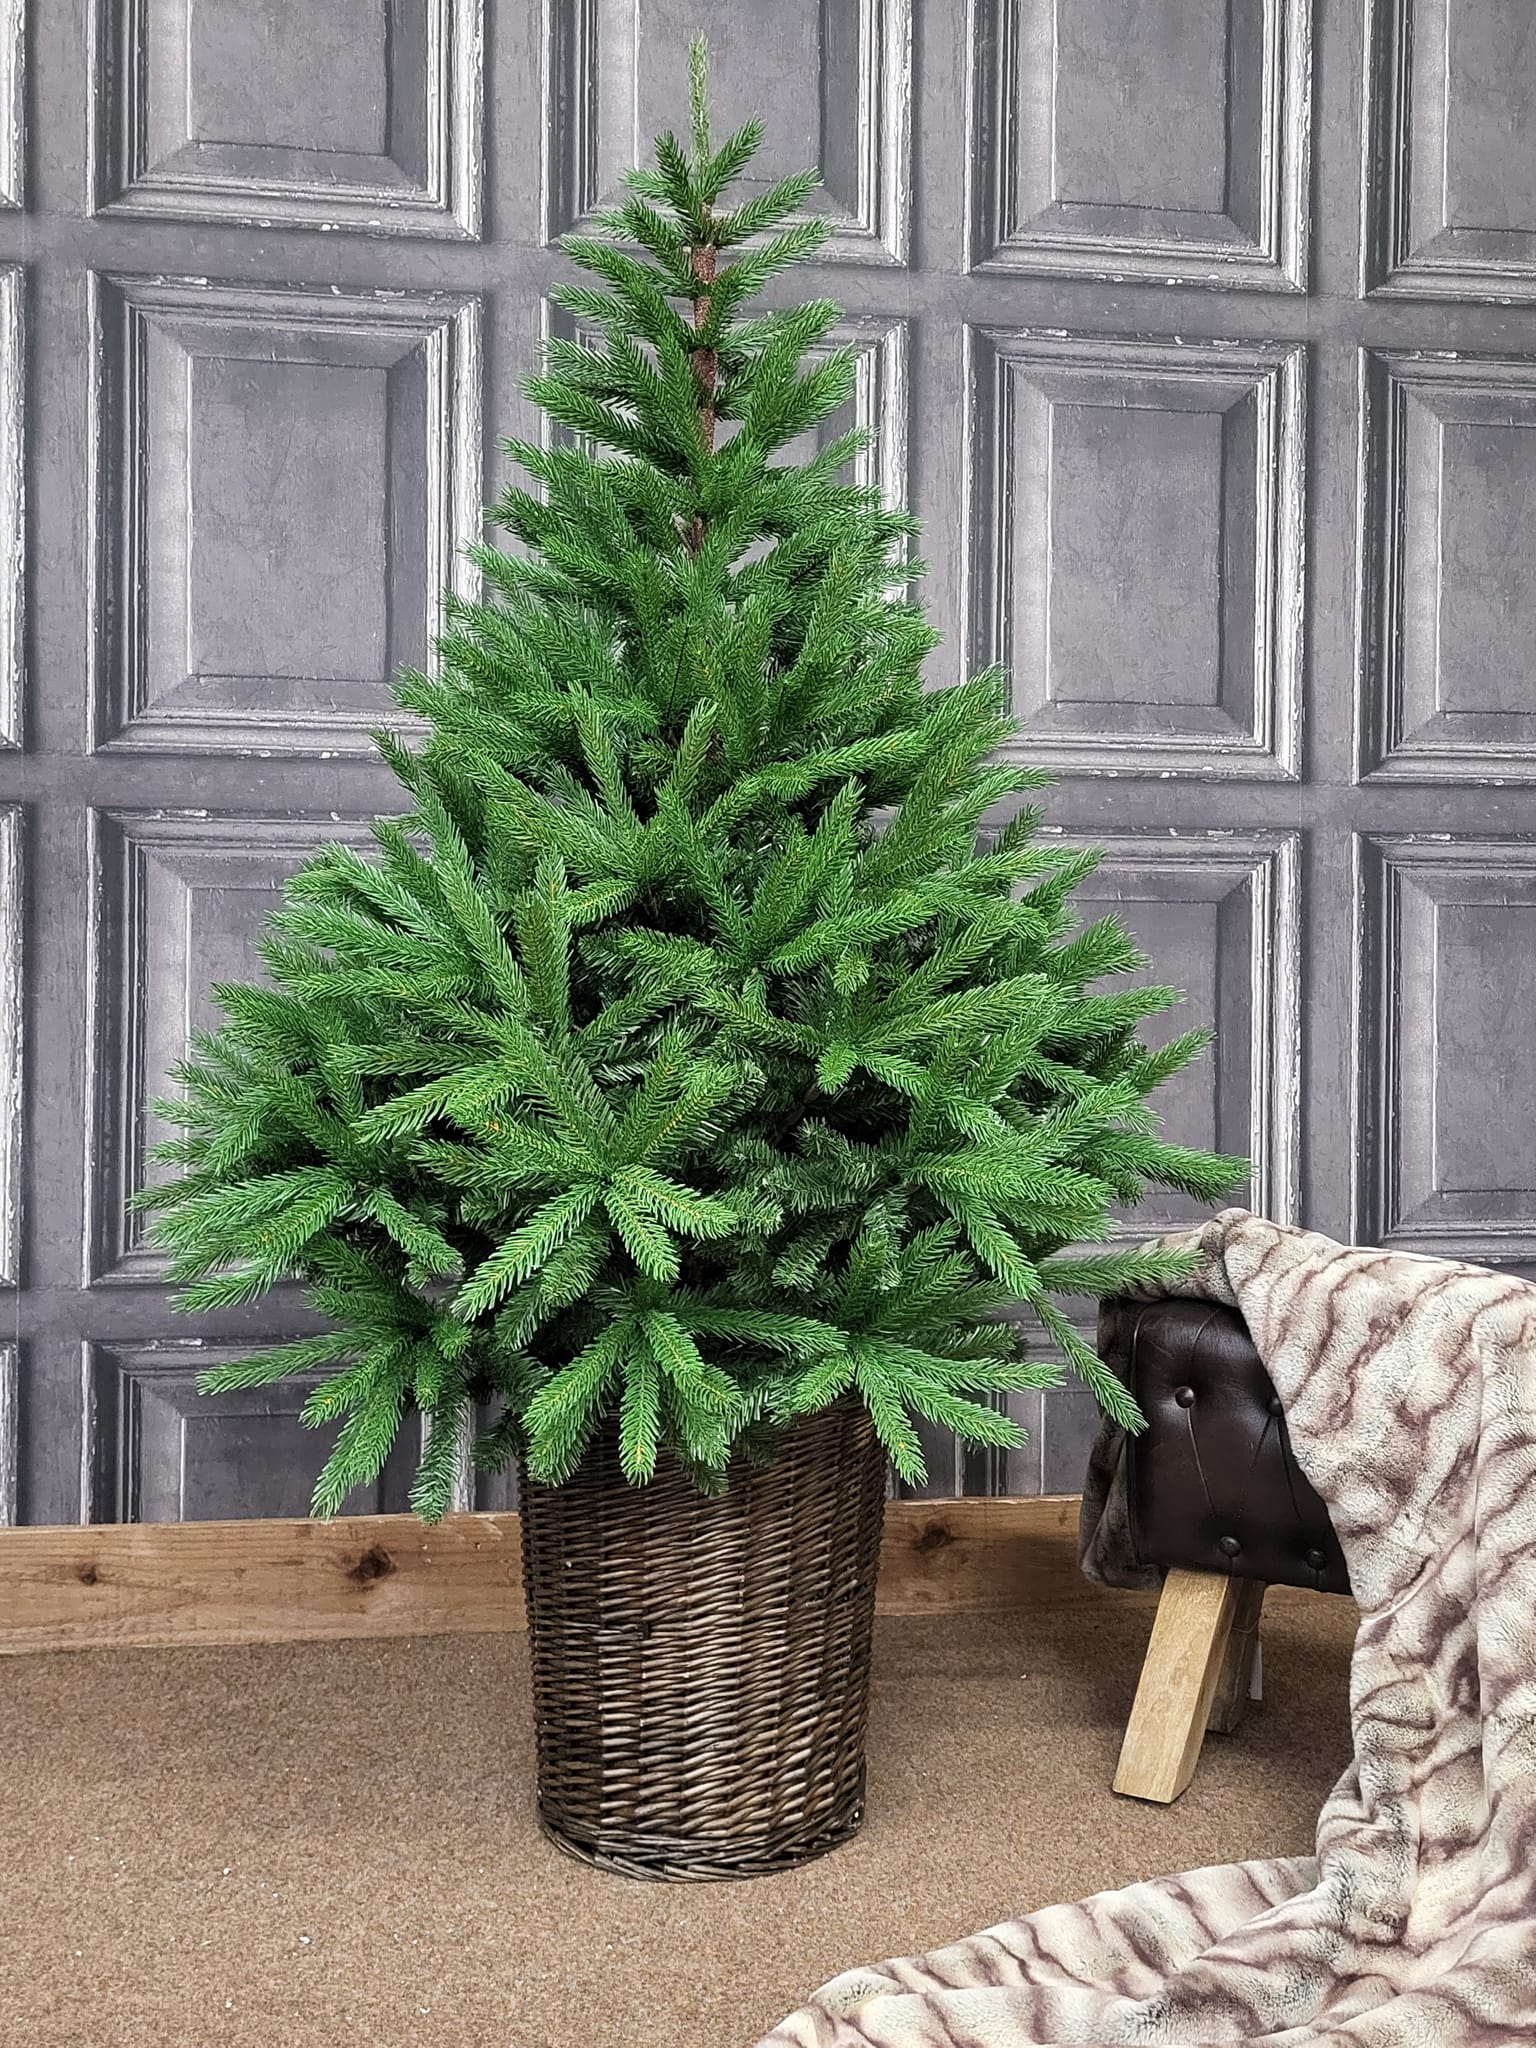 1.8m Artificial Christmas Tree | Glenside Fir Christmas Tree in Pot - 6 Foot